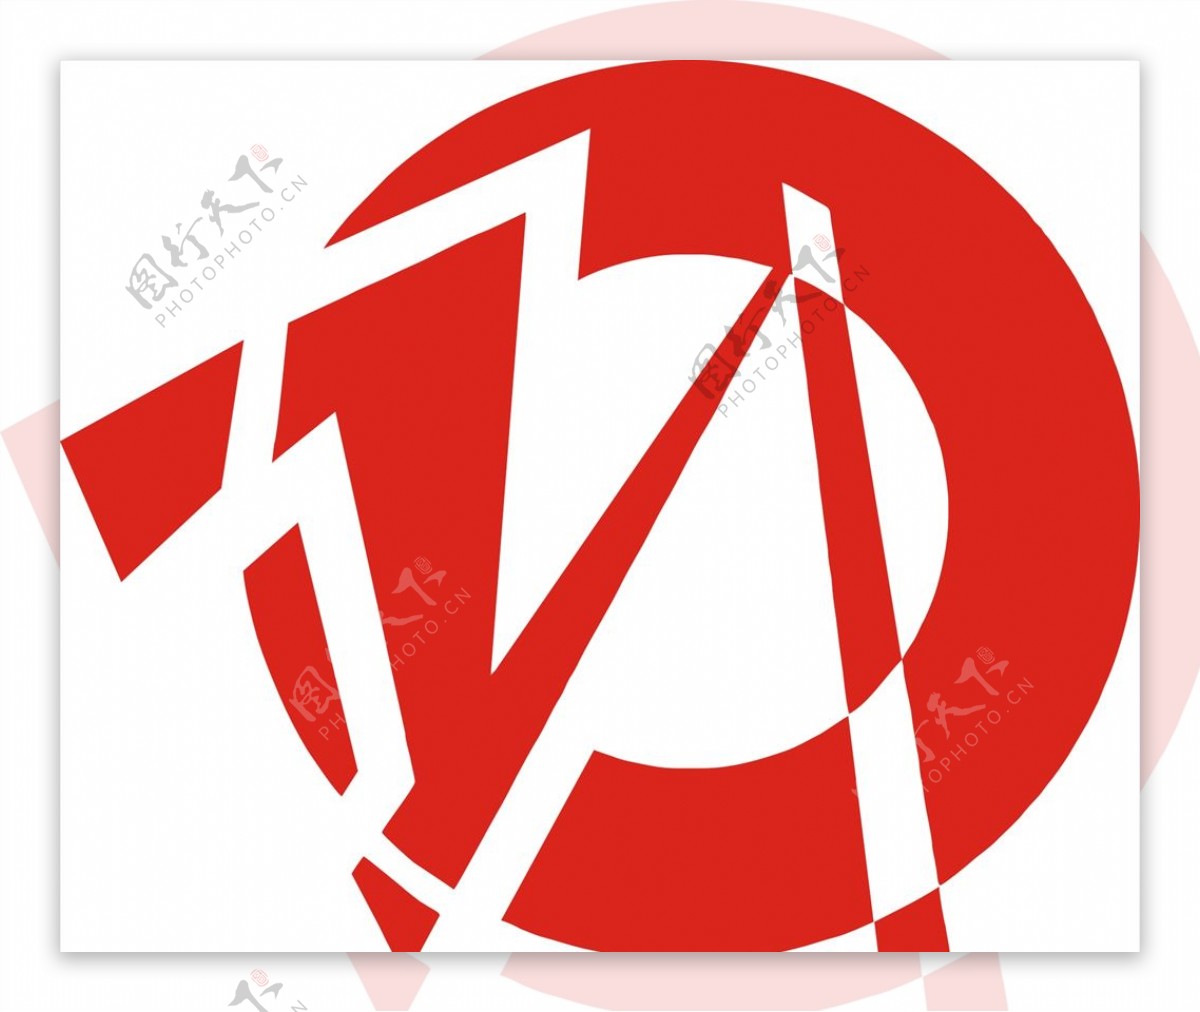 自律会logo